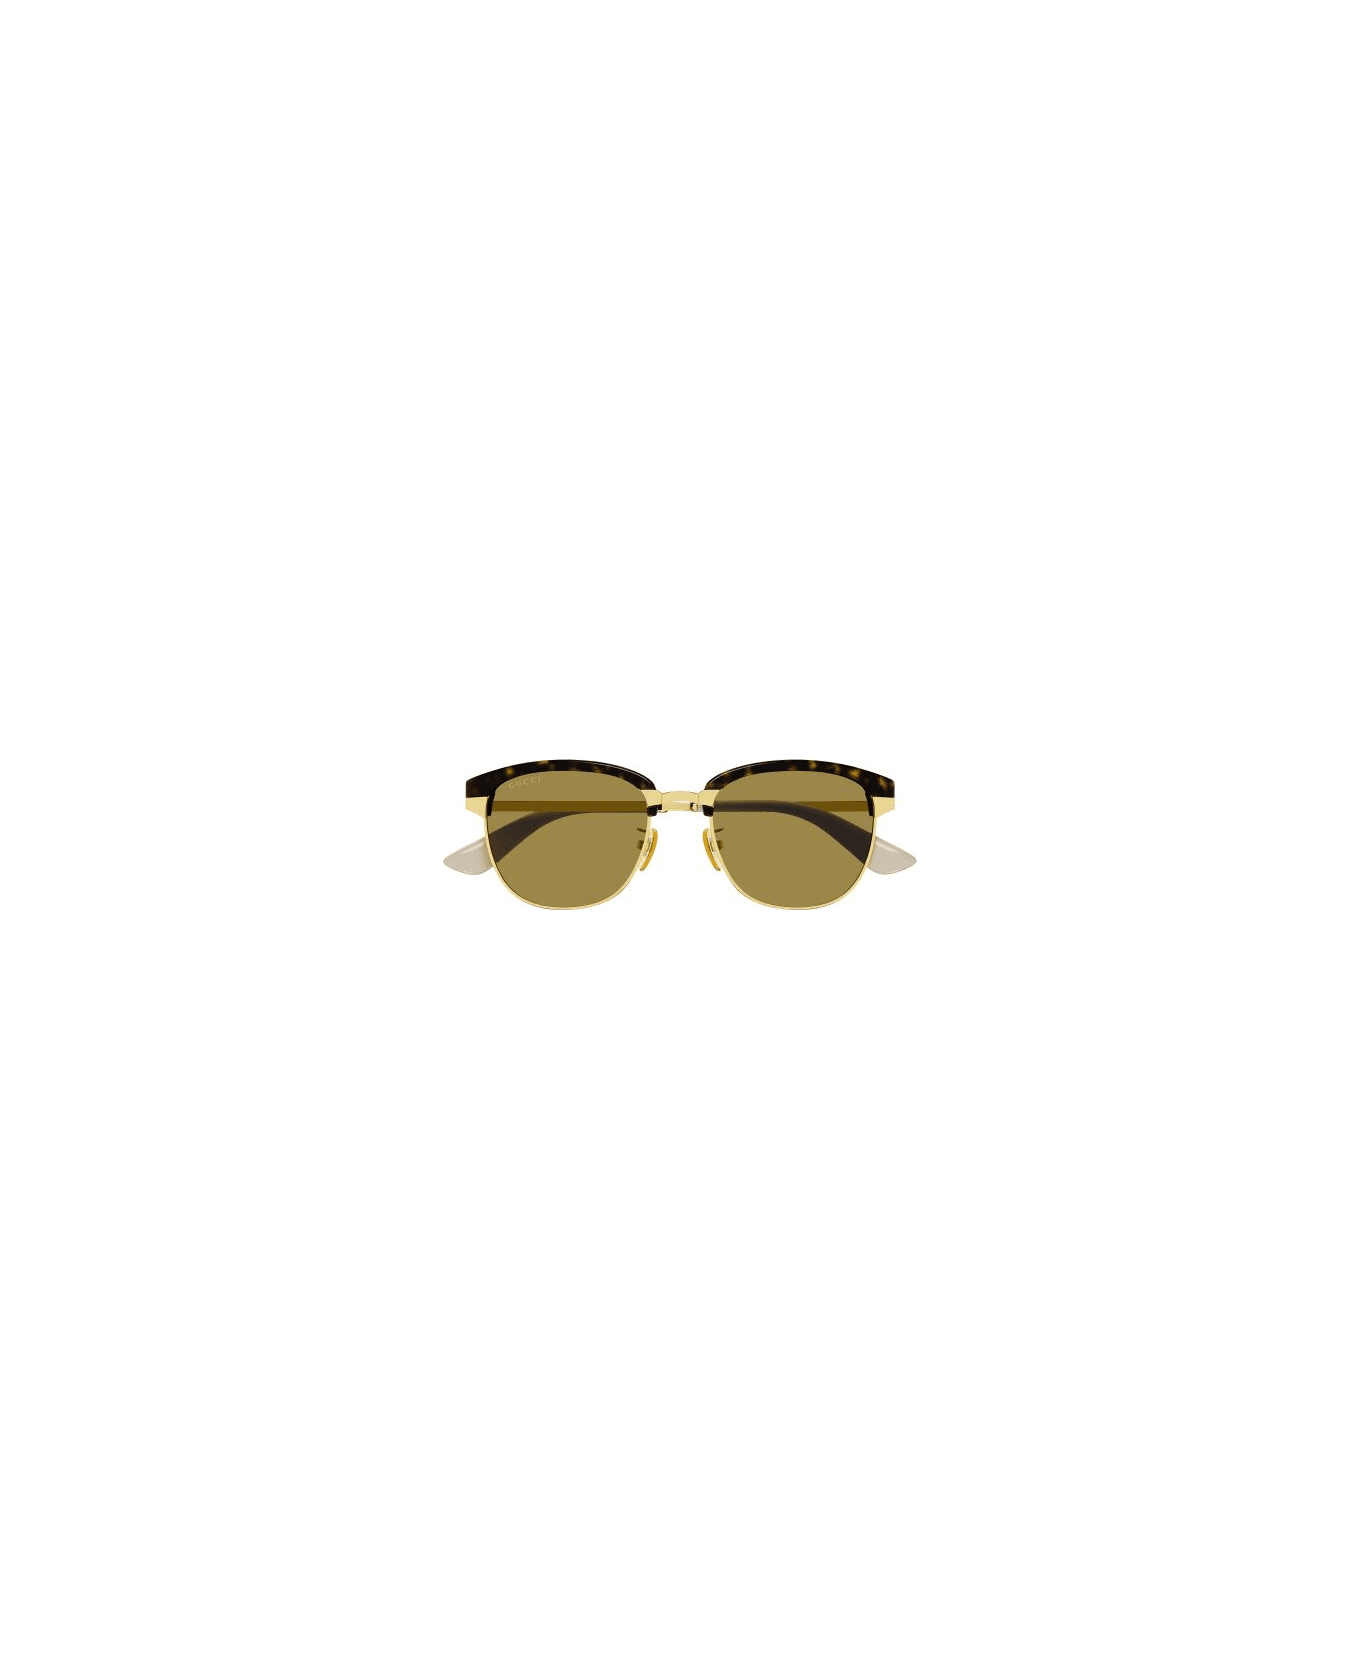 Gucci Eyewear 1eap4is0a - 001 gold gold brown